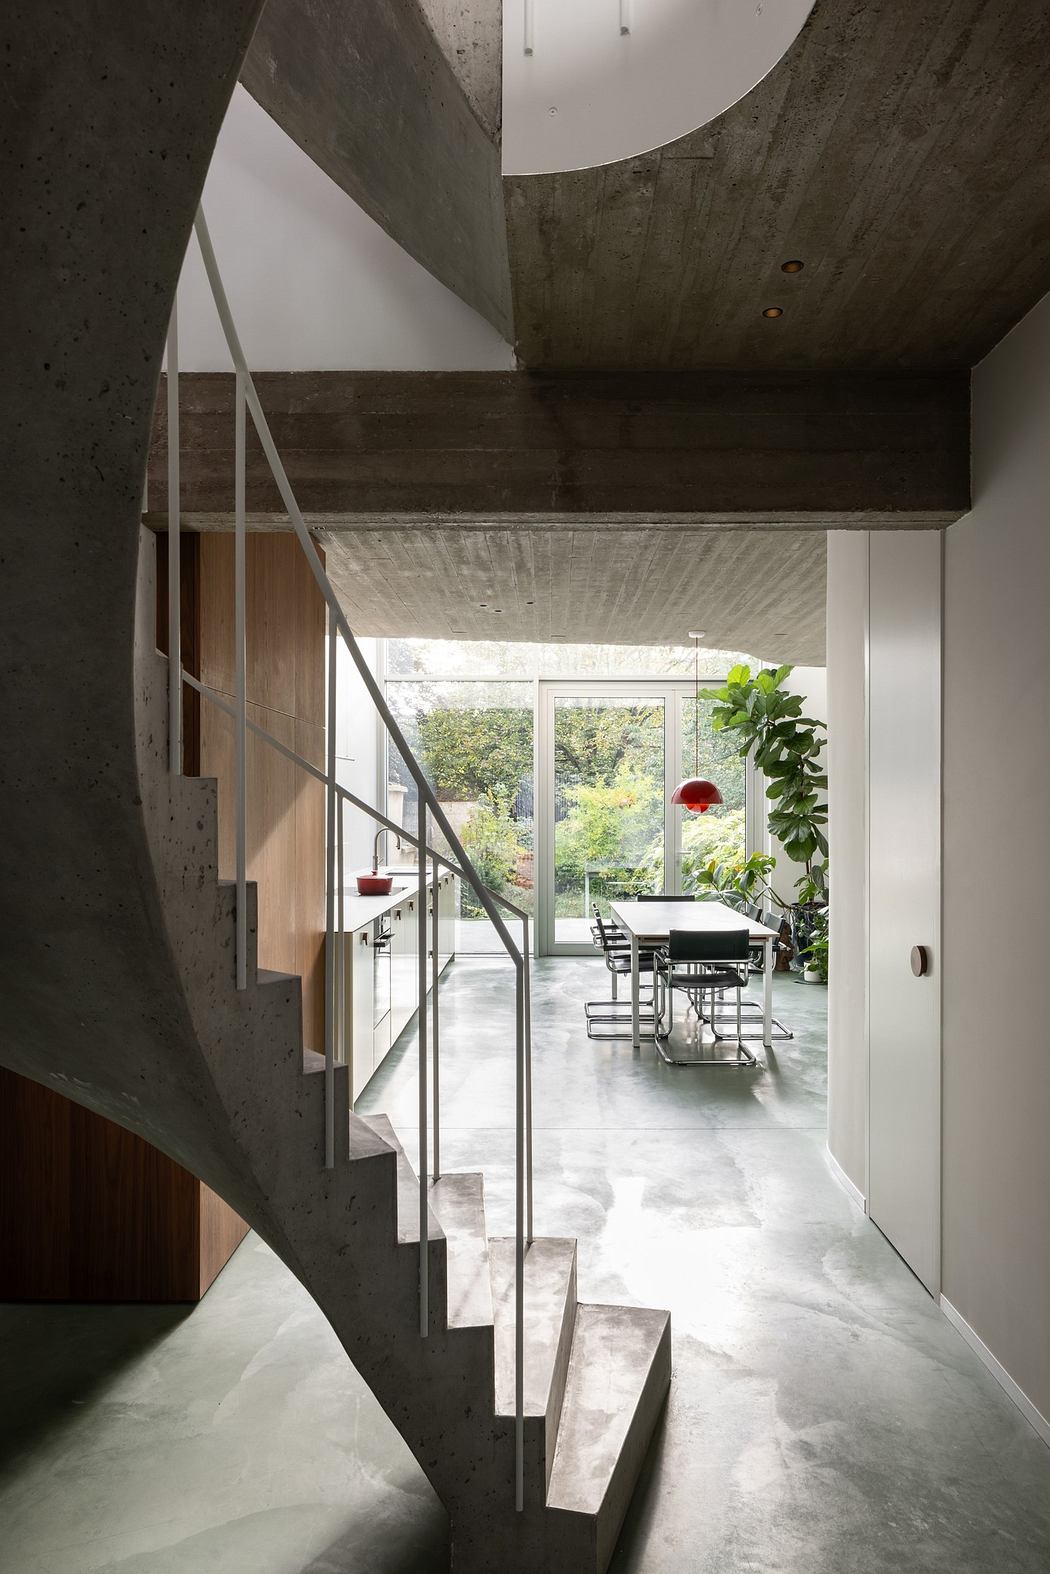 Modern interior with concrete spiral staircase and garden view.